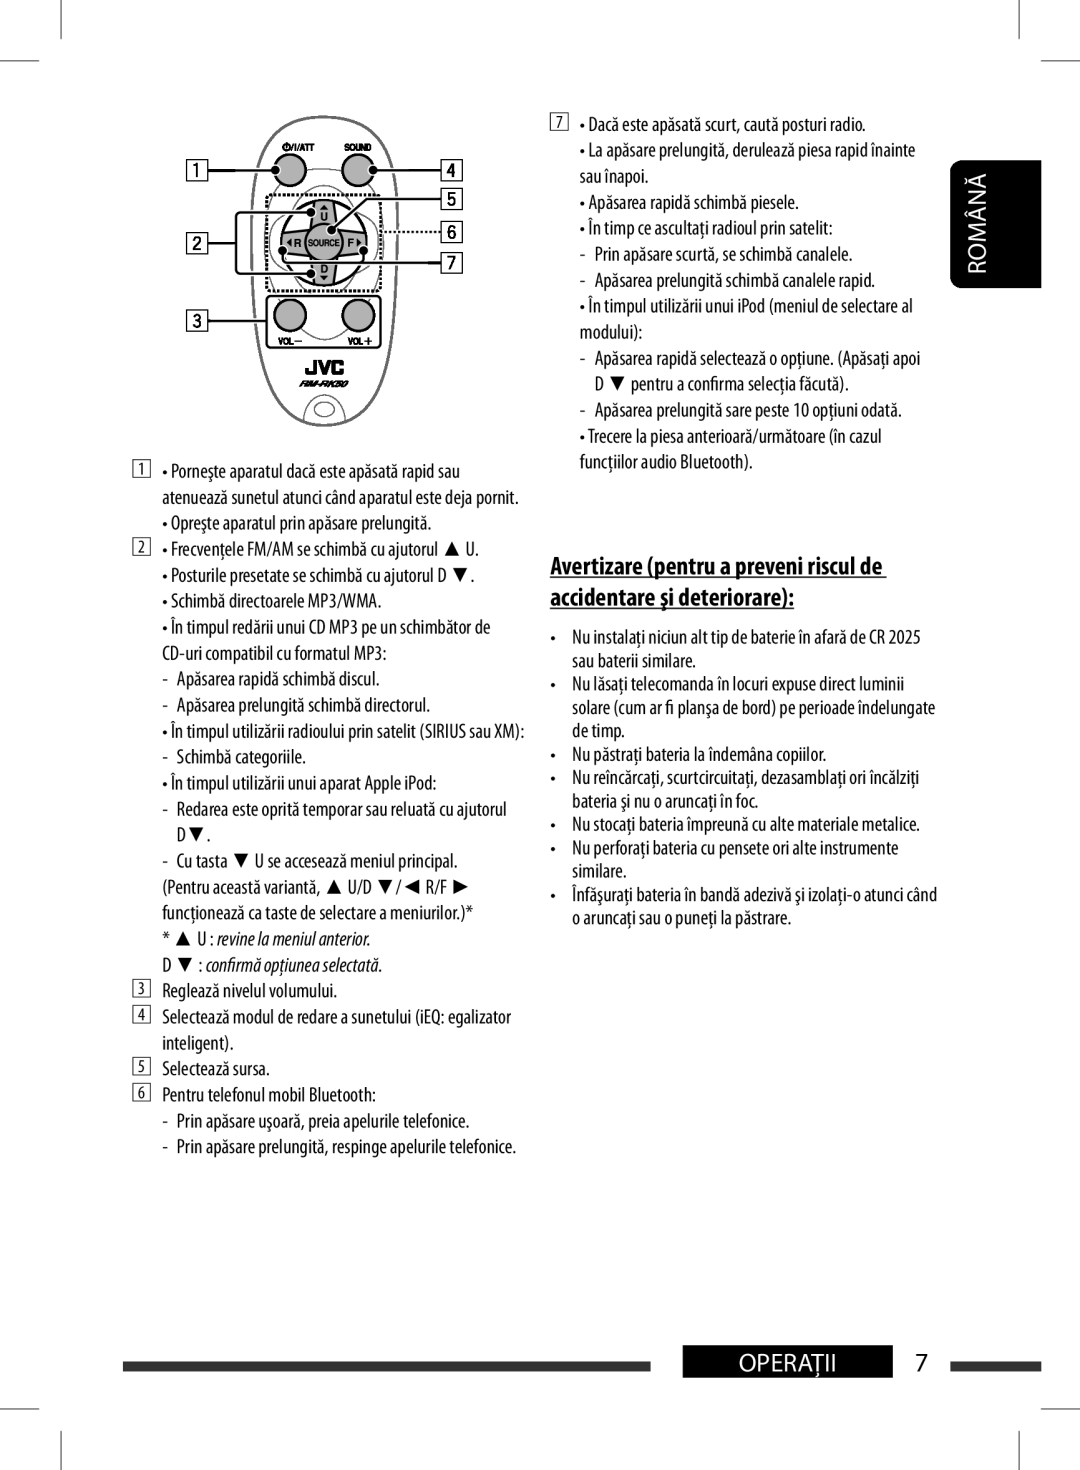 JVC KD-BT11 manual Română, Operaţii, radio, Changes the categories, While listening to an Apple iPod D, mode 